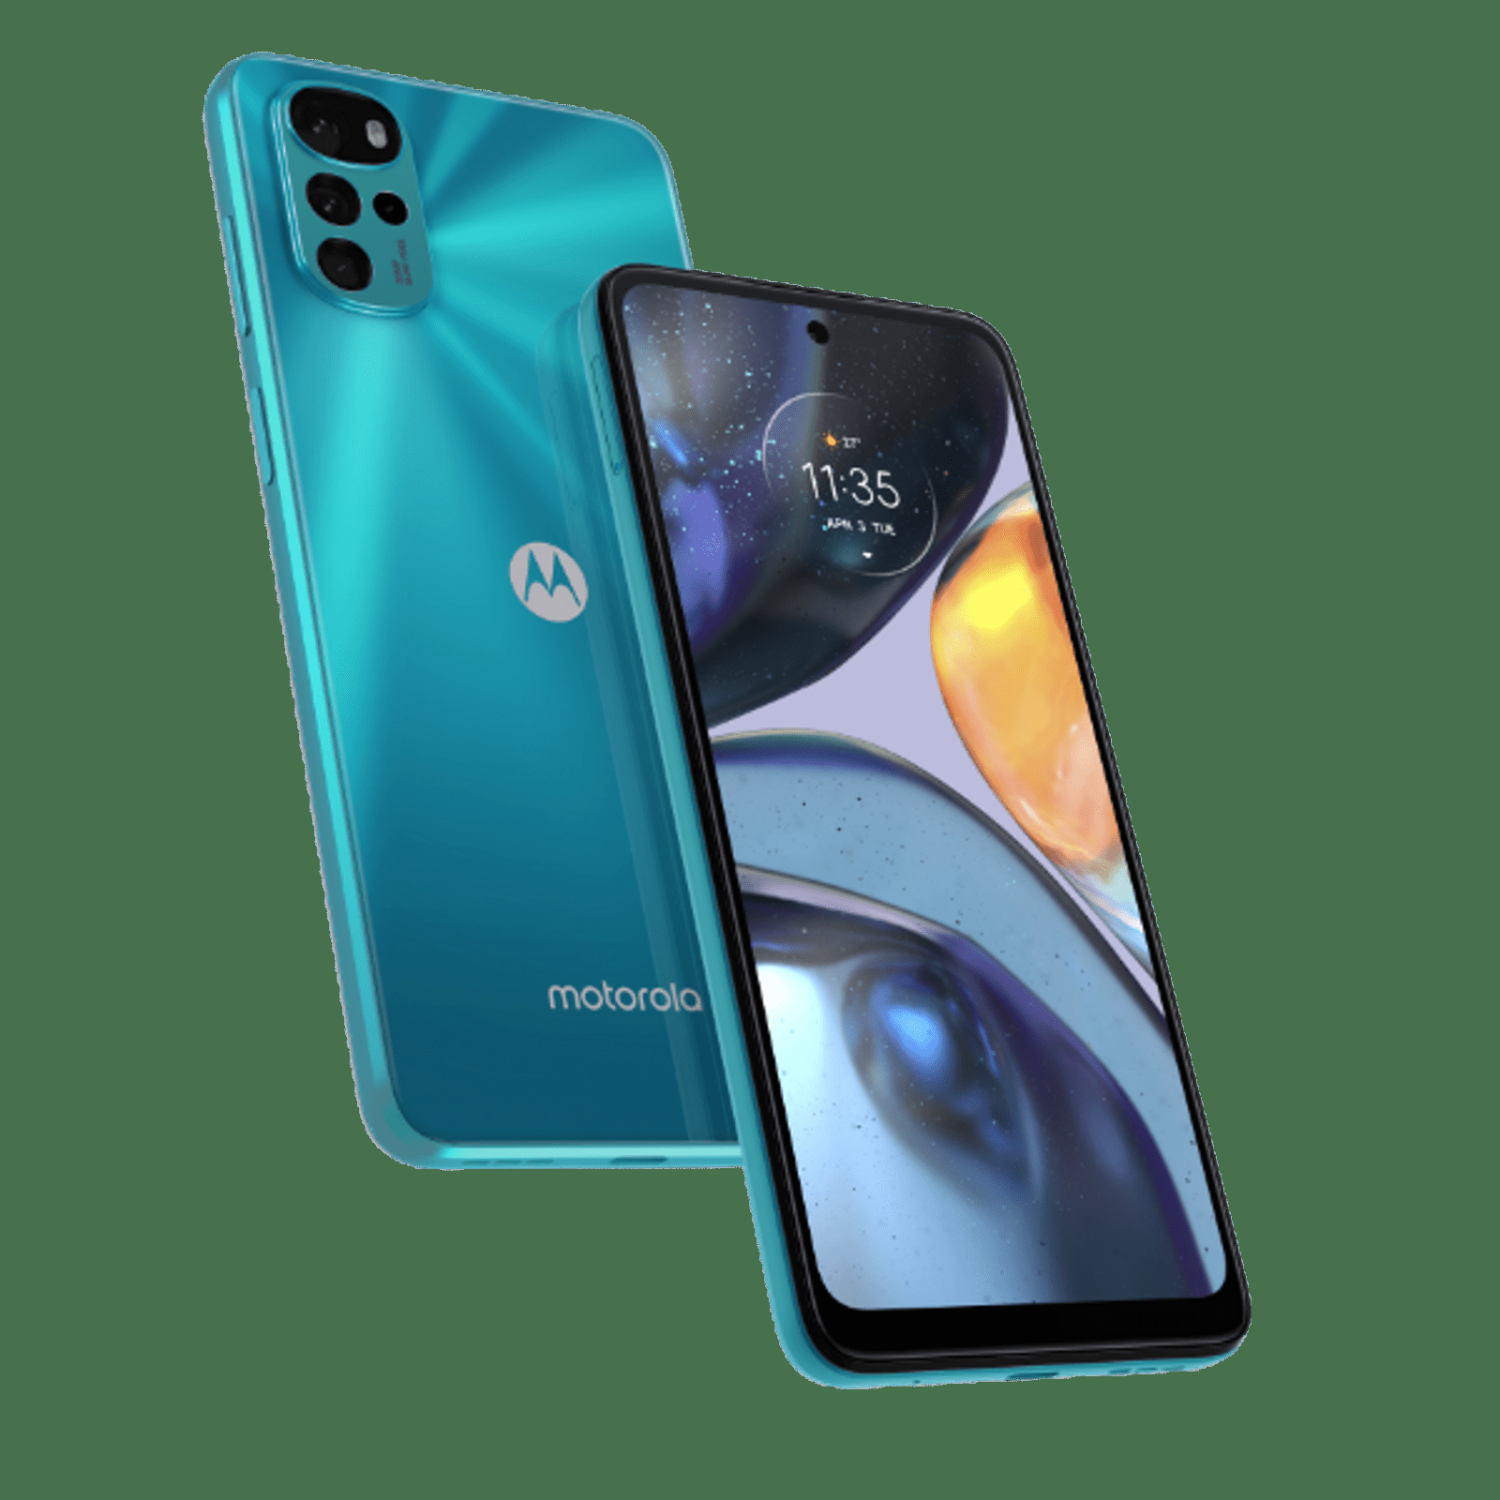 Motorola Moto G22 64/4GB - 50 MP Camera - 6.5" 90Hz HD+ Display - Android 12 - Unlocked - Dual Sim - International Model - 2022 - Iceberg Blue - Brand New